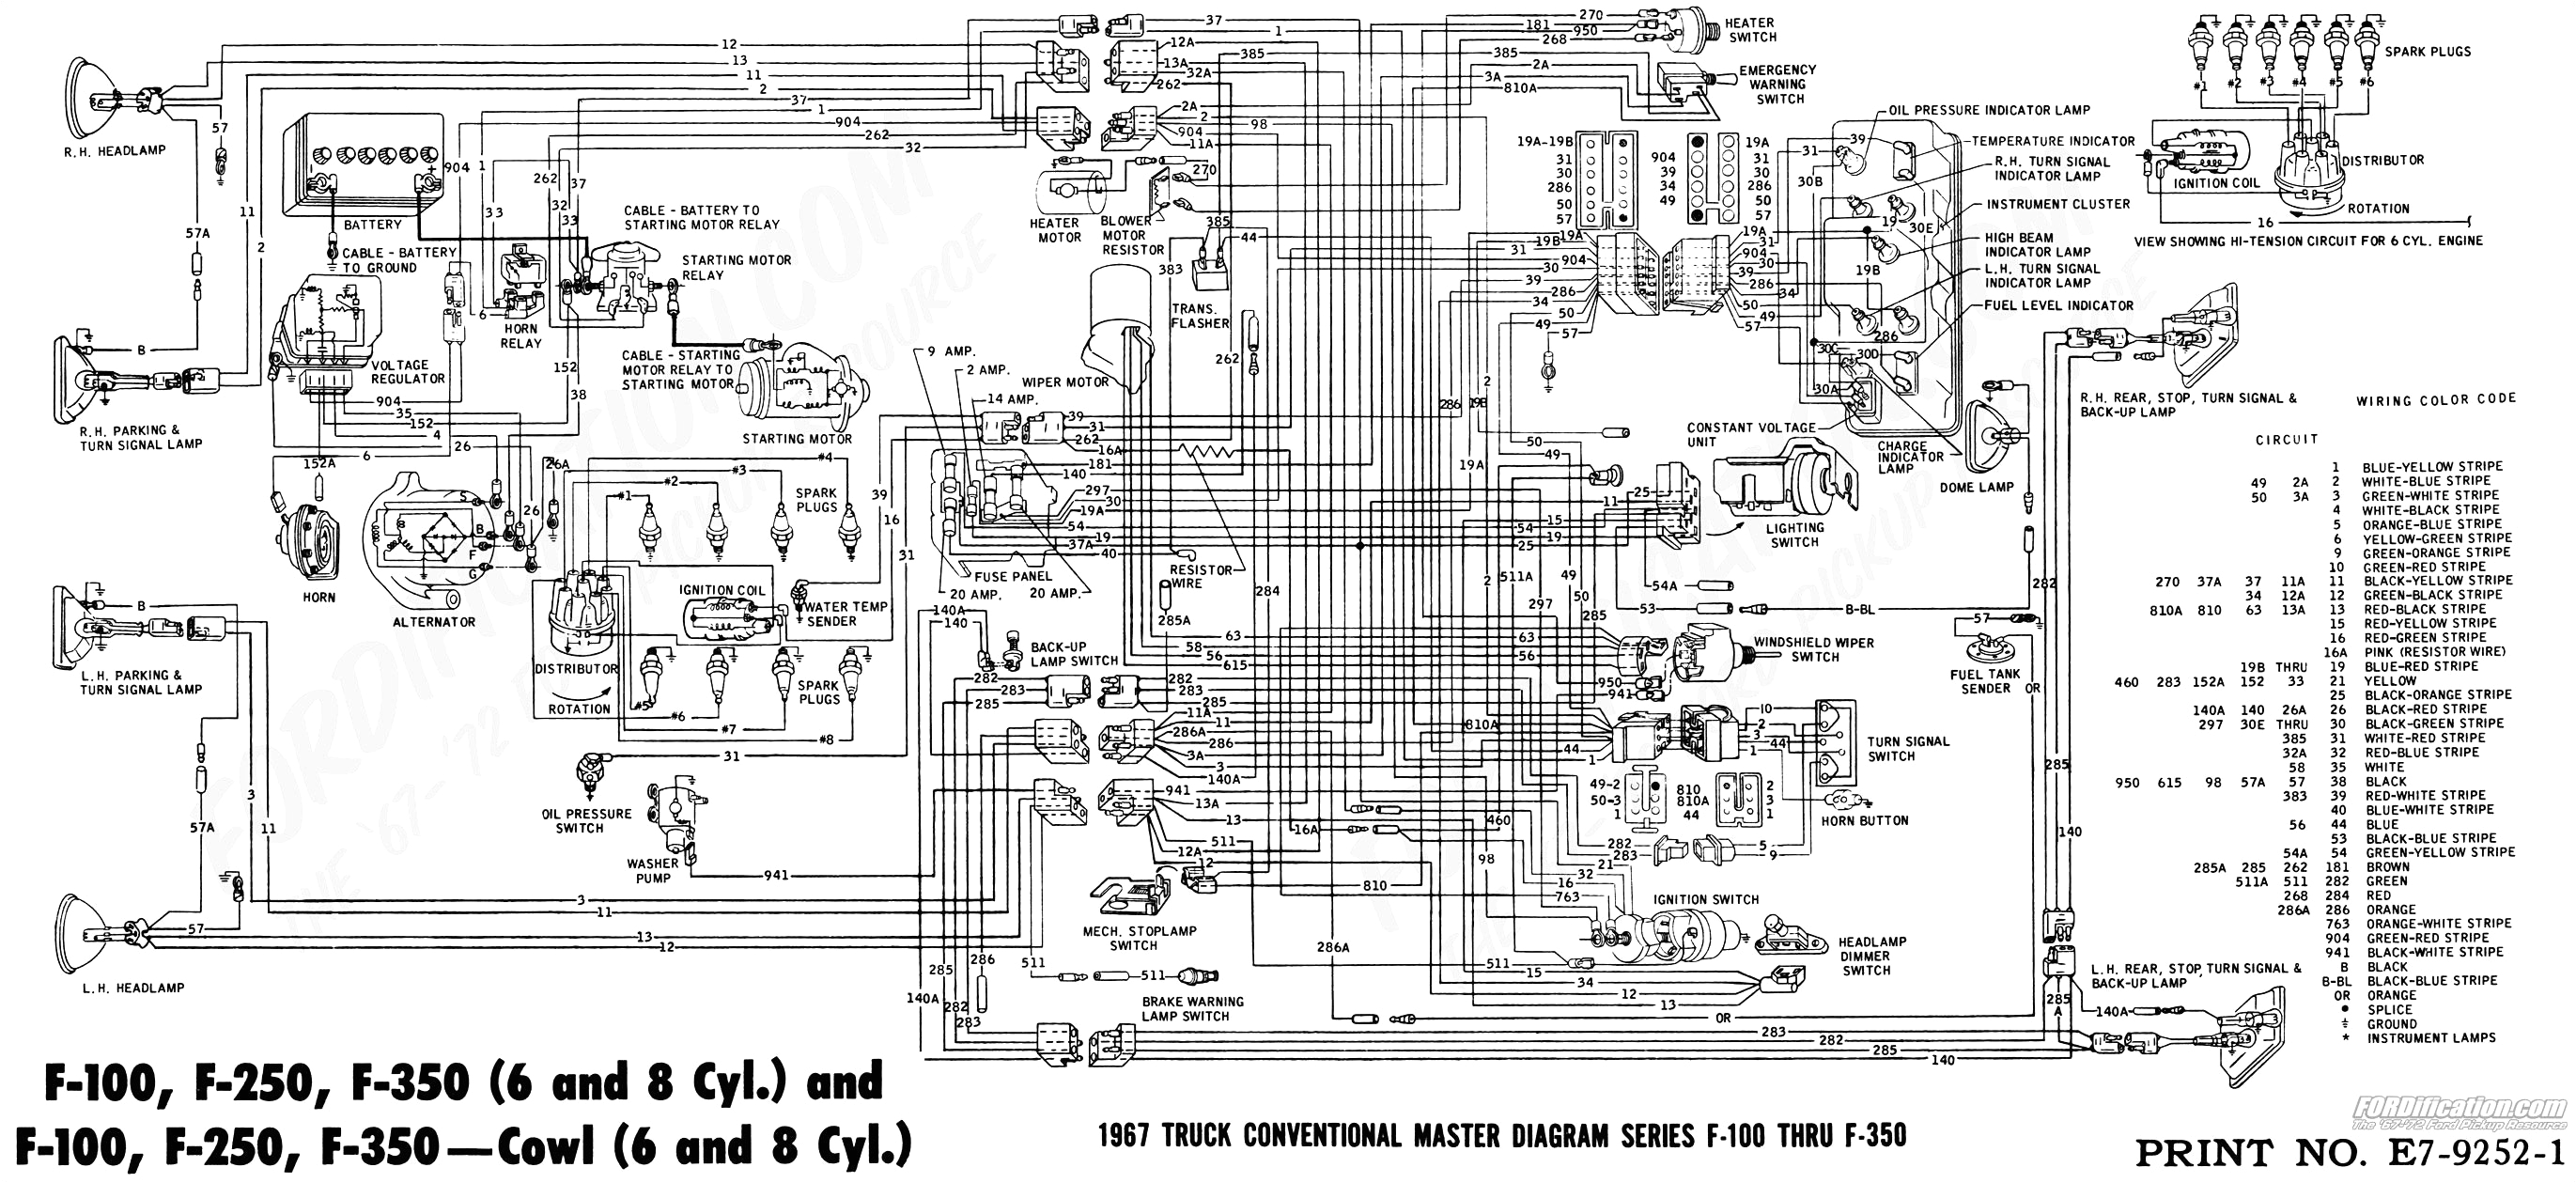 98 ford f150 wiring diagram wiring diagram ideas of 1998 ford f150 wiring diagrams of 1998 ford f150 wiring diagrams on 98 ford f150 wiring diagram jpg